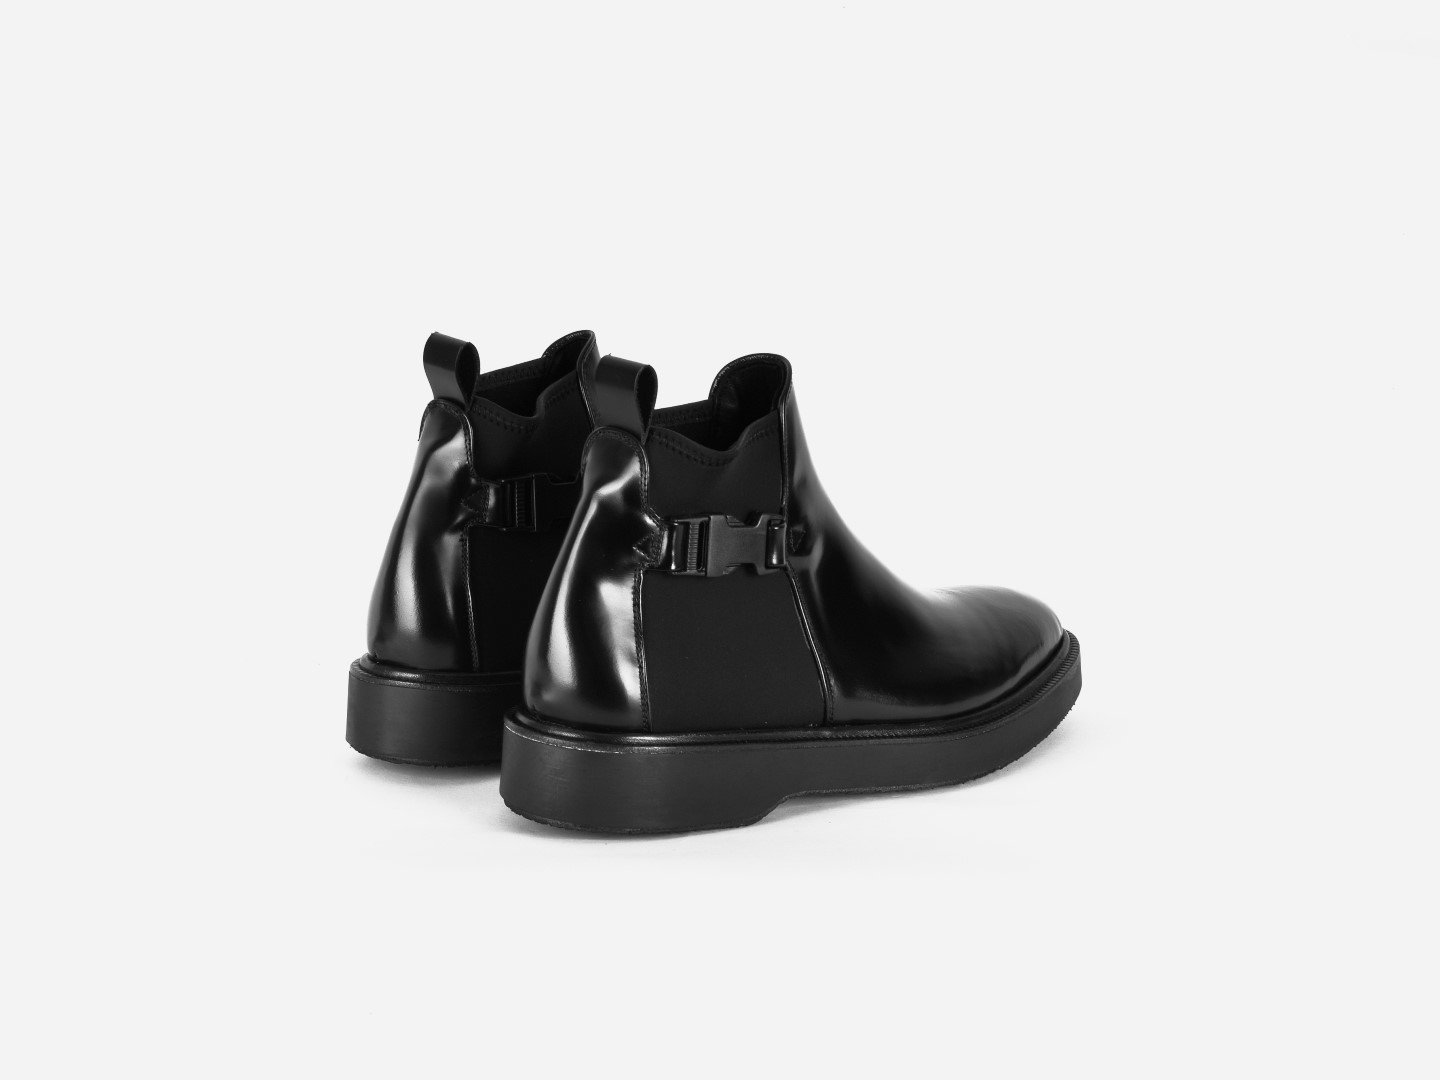 pregis shay black leather chelsea boot designed in London